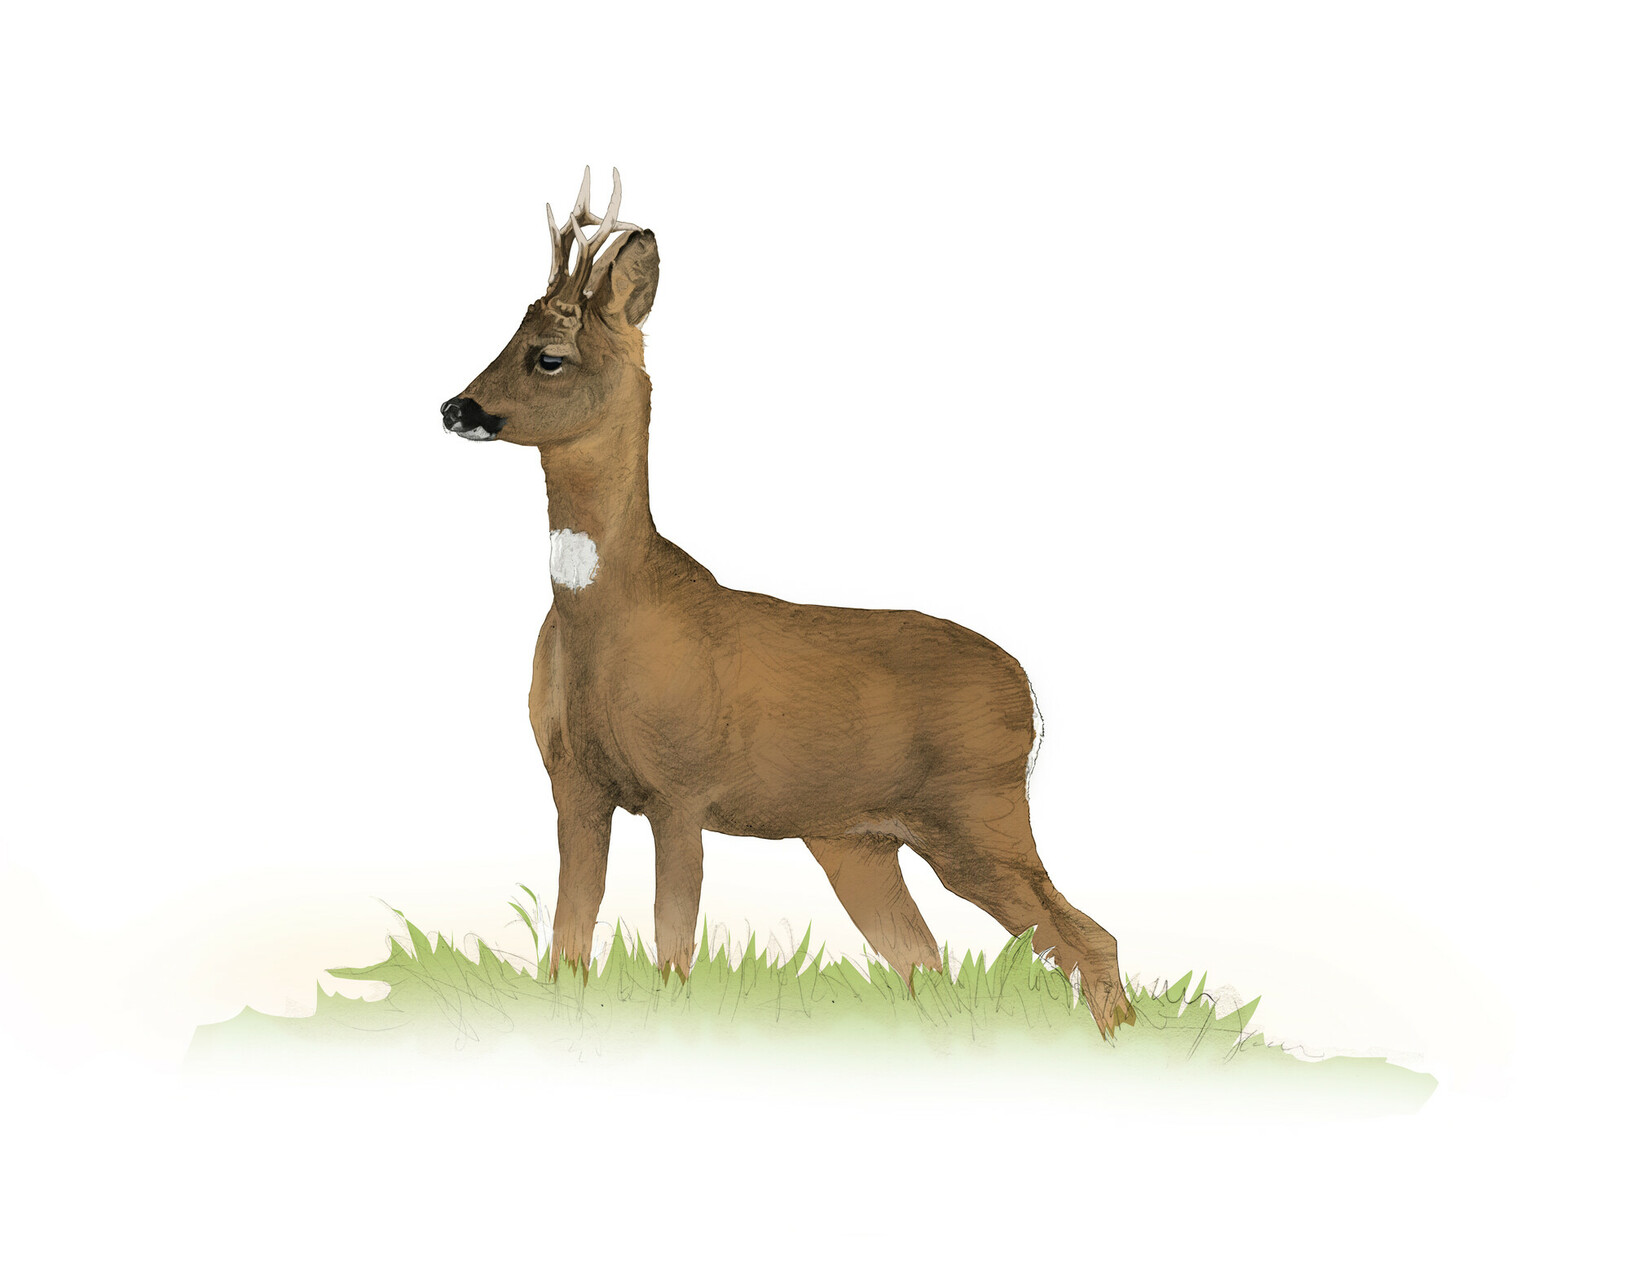 Roe deer illustration by Nick Ellwood.